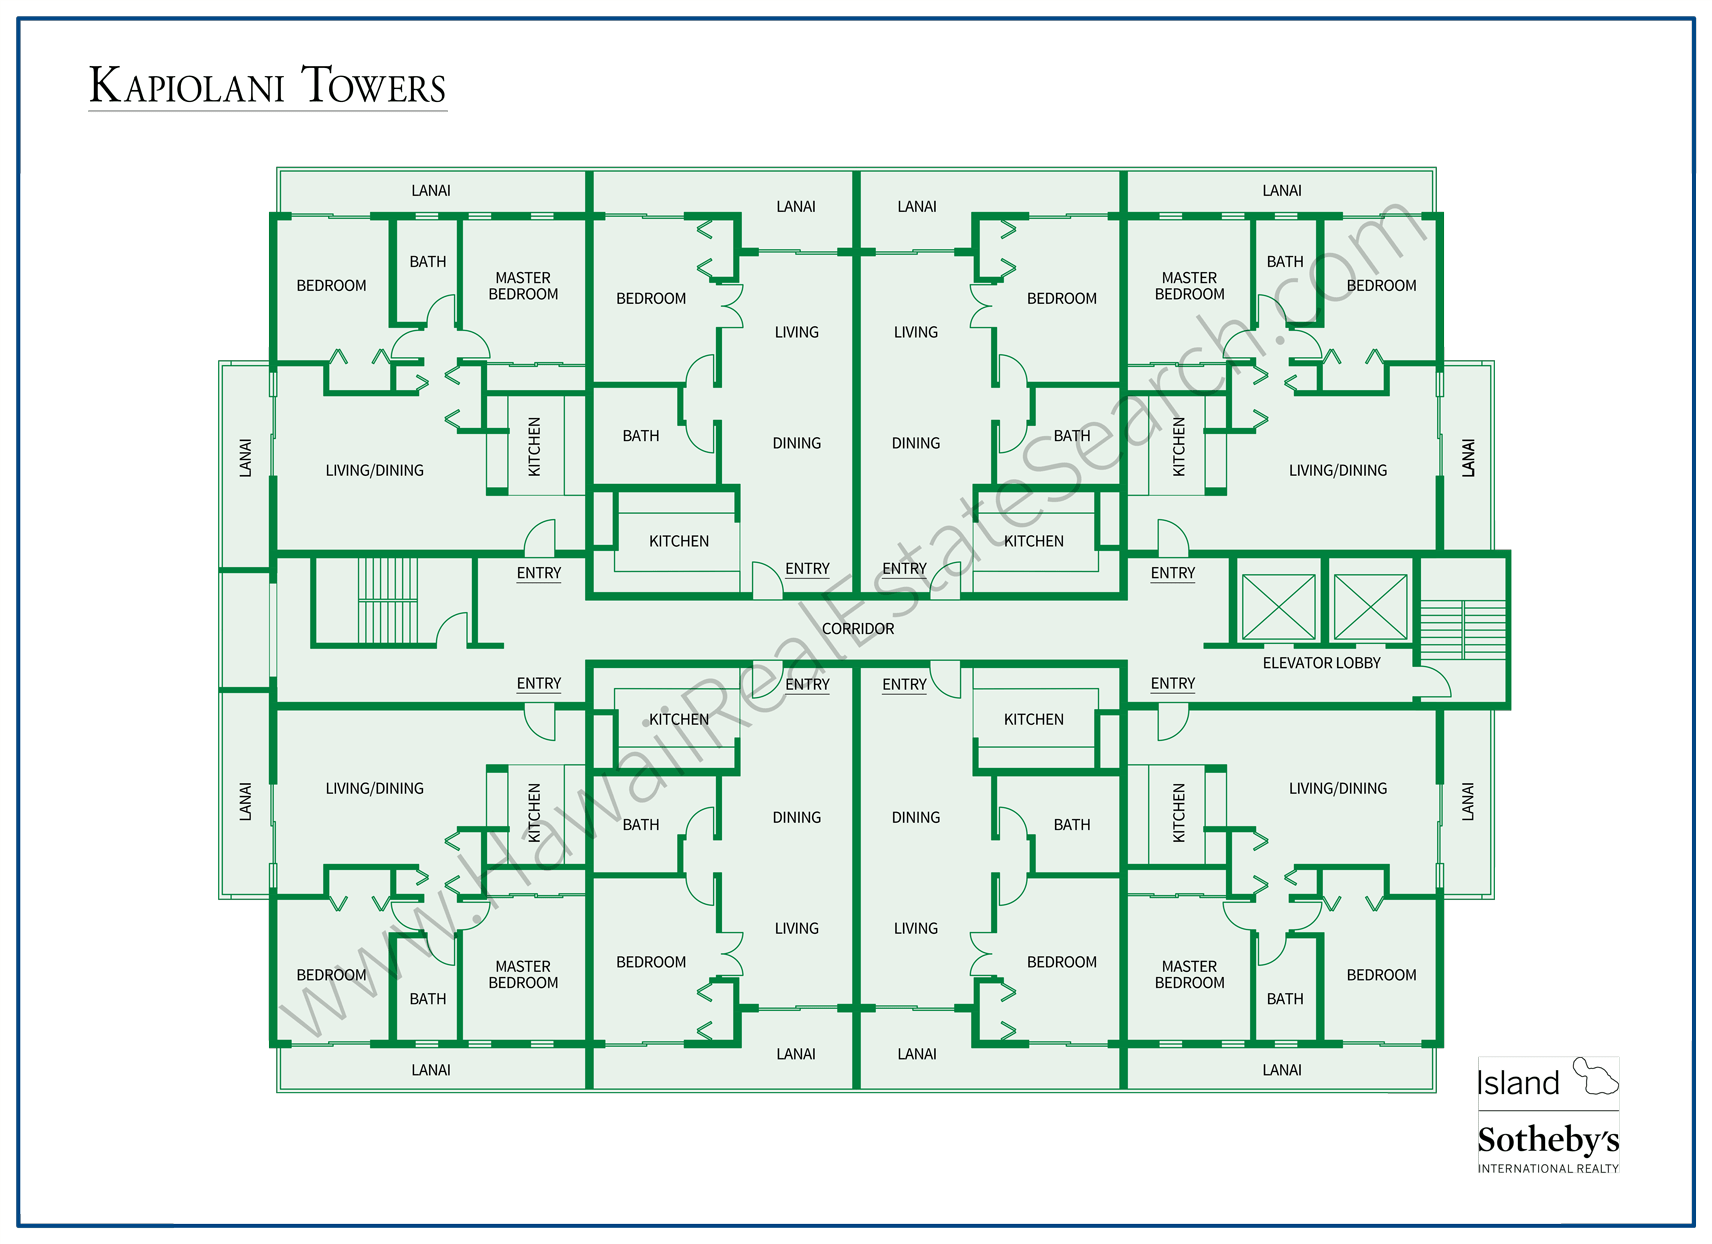 Kapiolani Towers Map